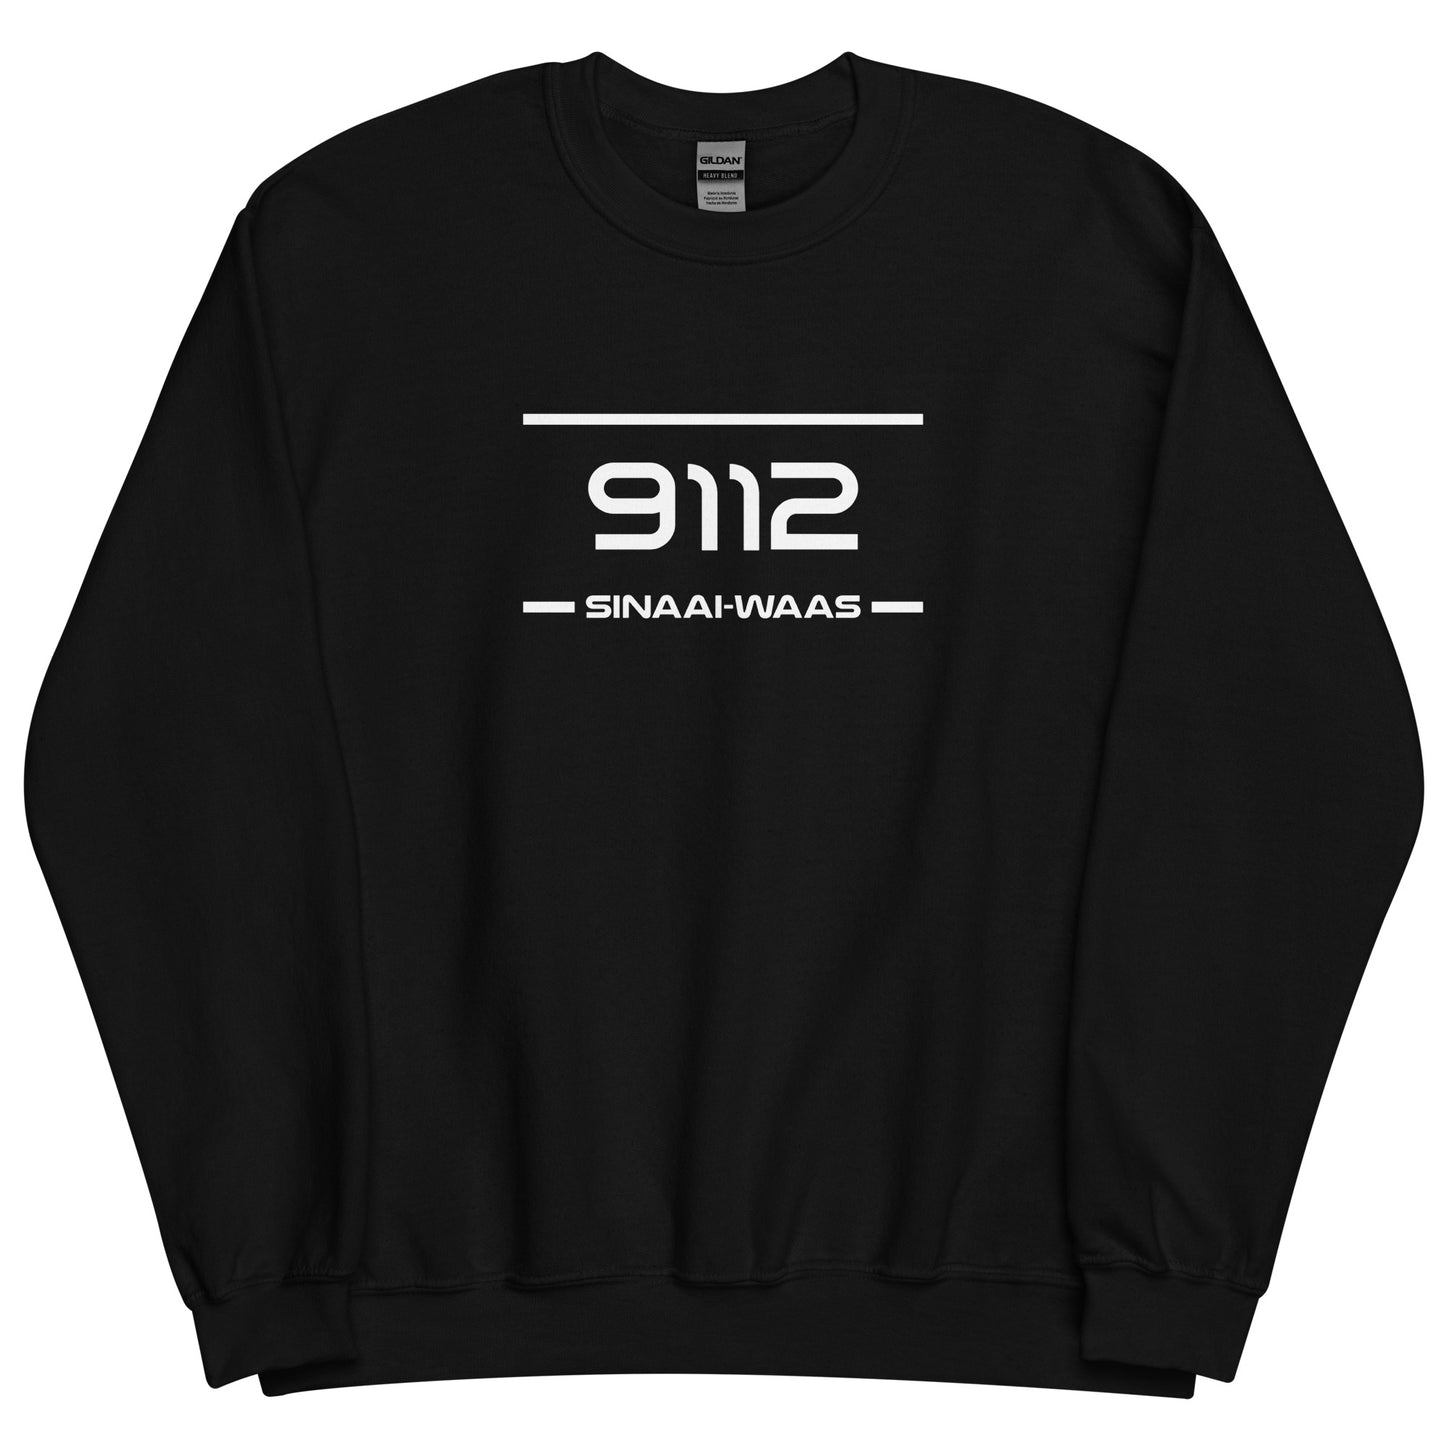 Sweater - 9112 - Sinaai-Waas (M/V)